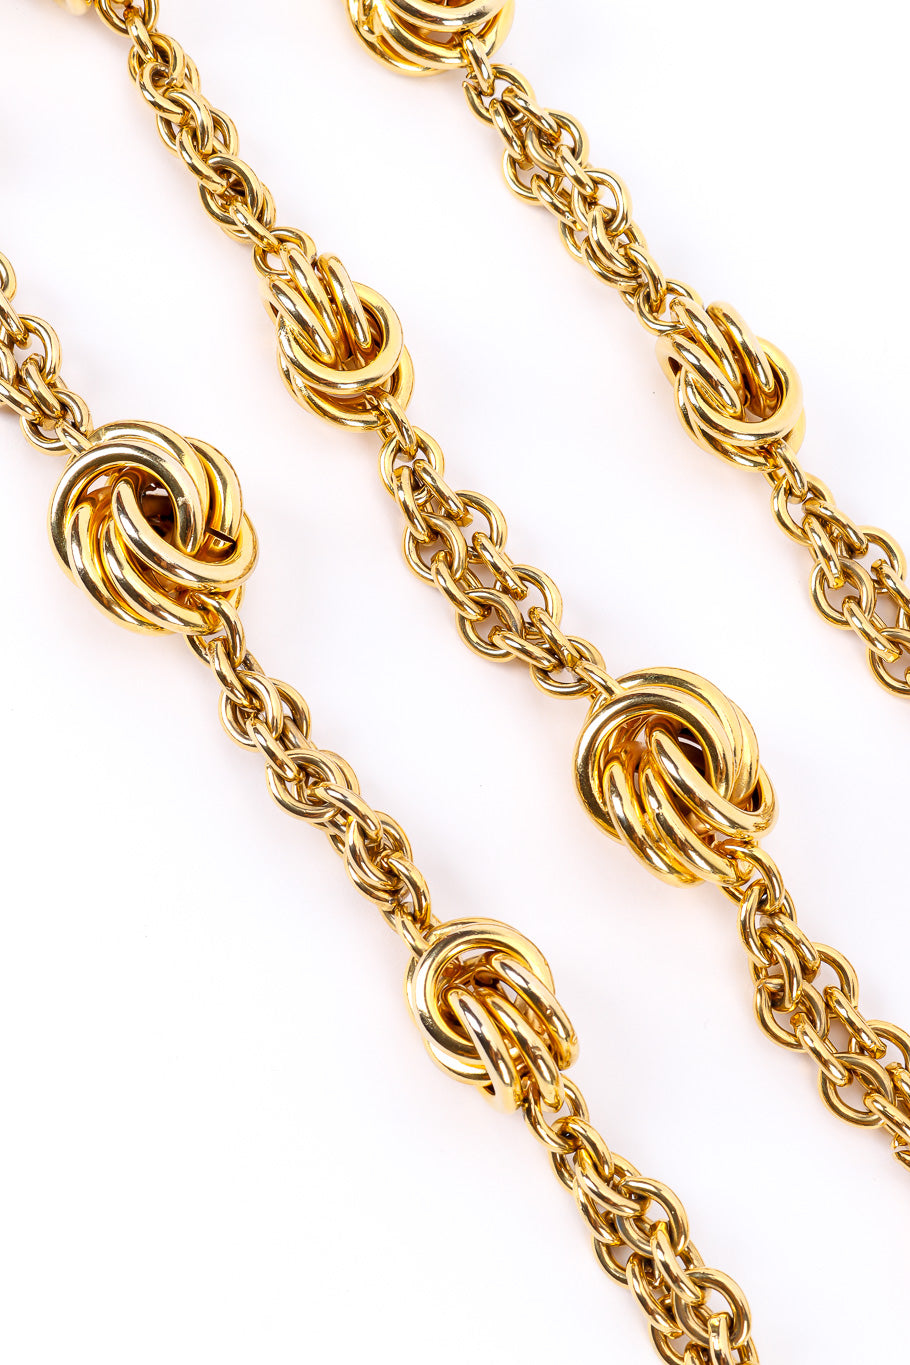 Gold metal vintage chain belt on white background three strands close @recessla